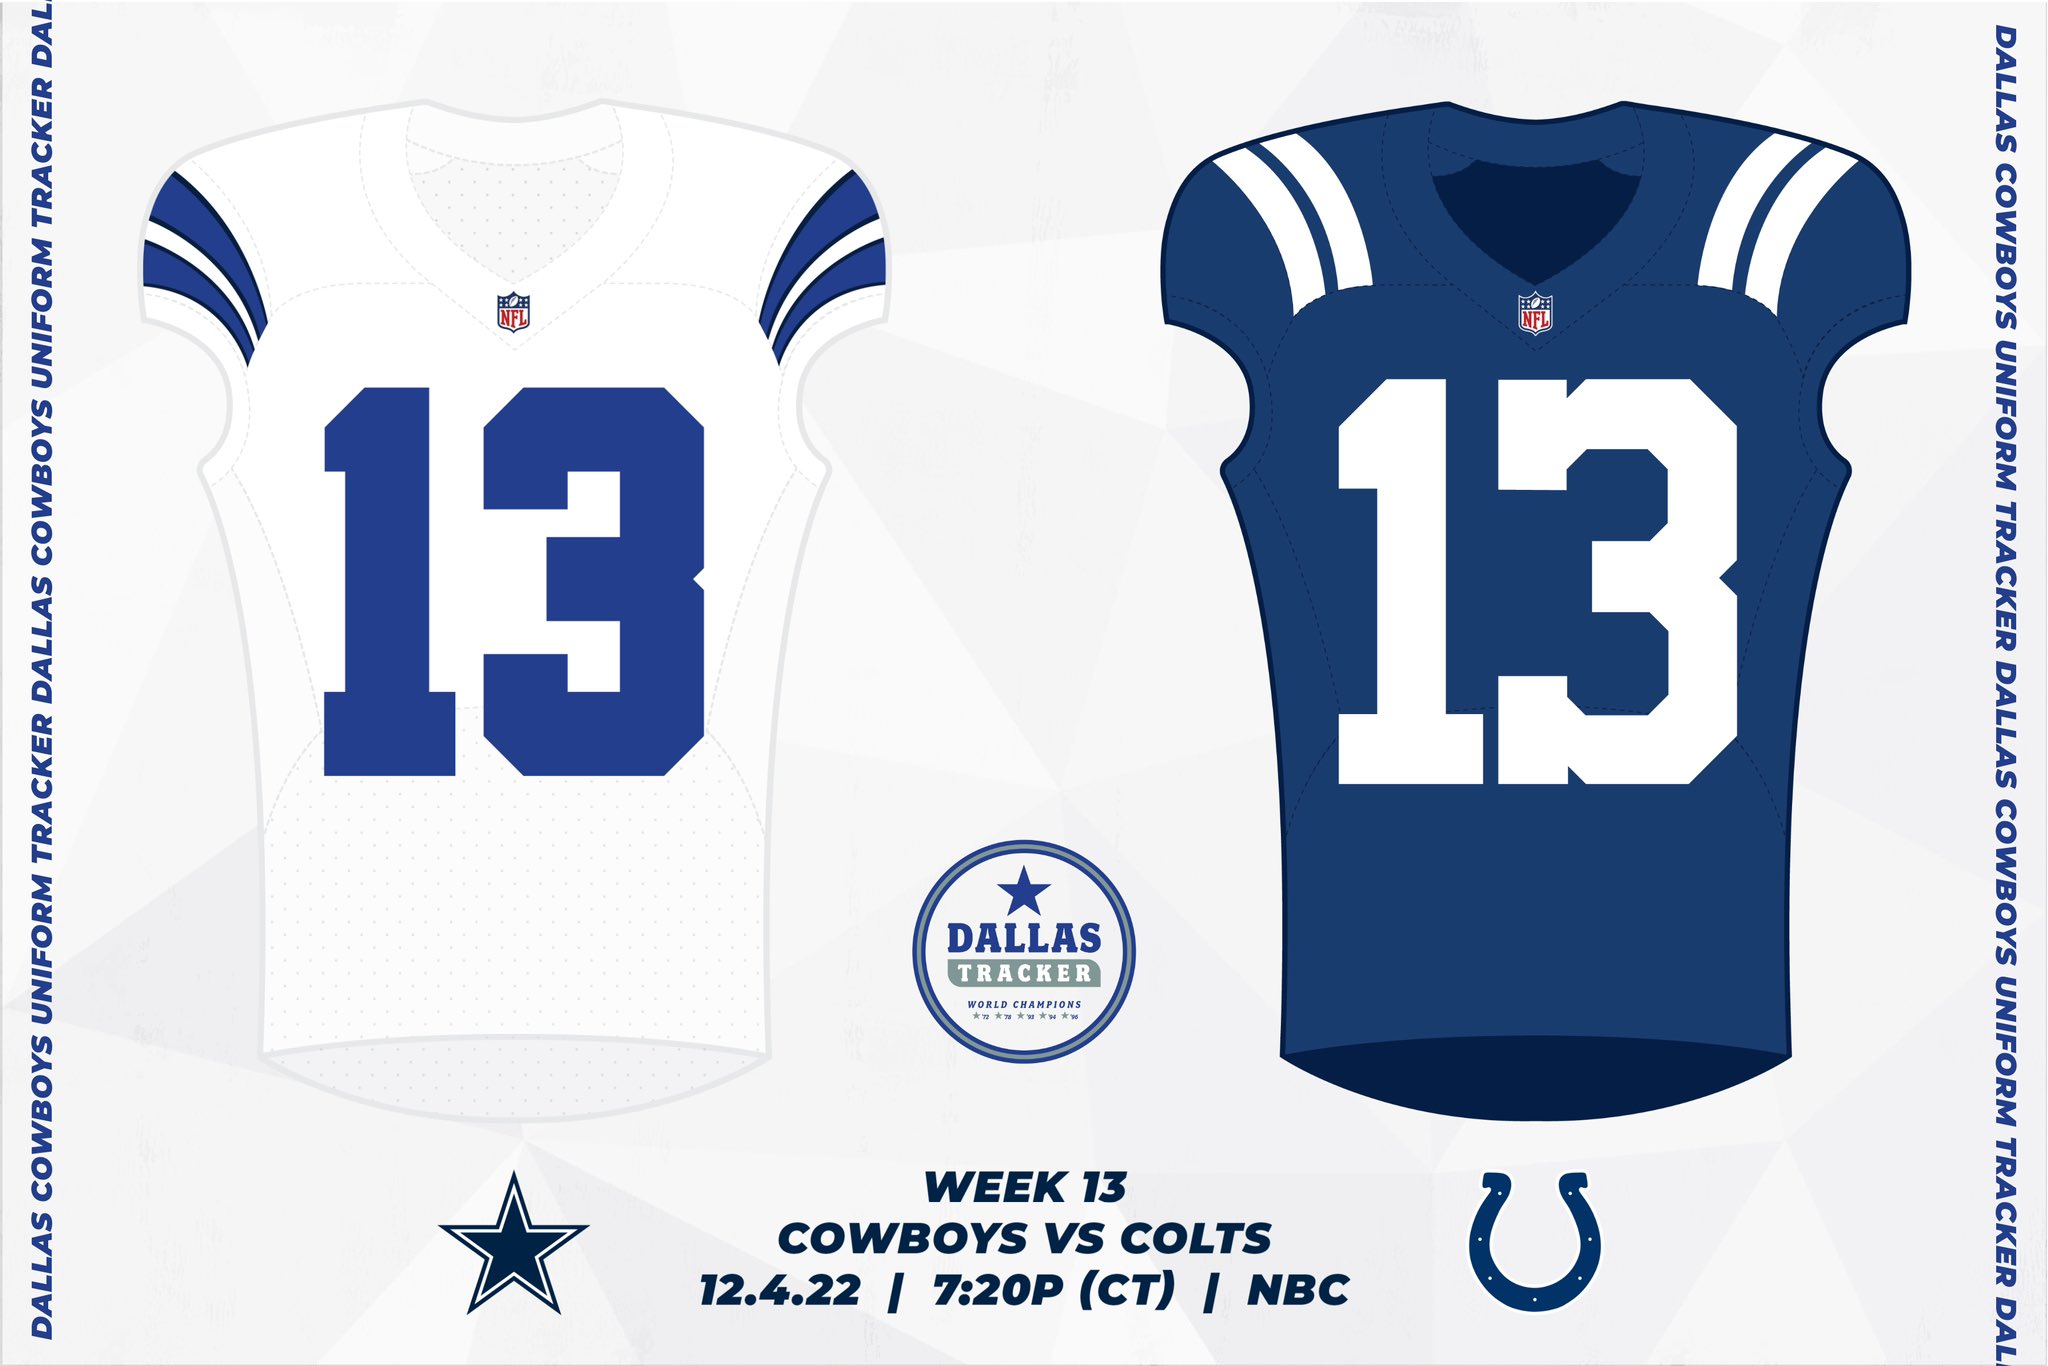 Dallas Cowboys Uniform Tracker (@dallas_tracker) / X